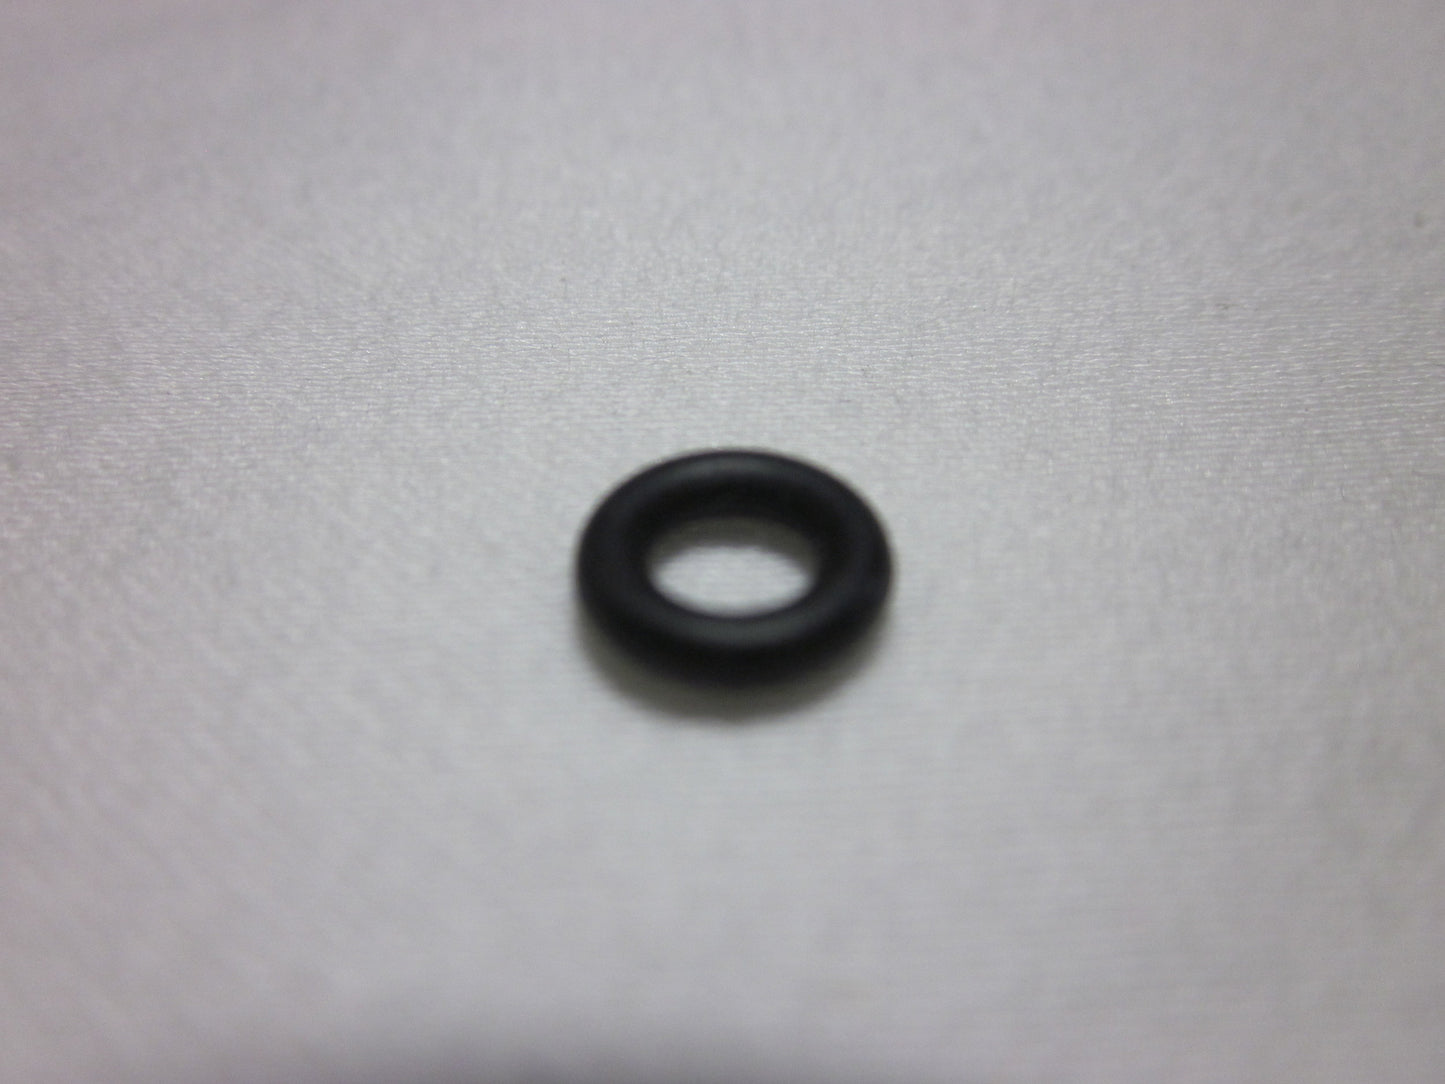 Firelake Small Nozzle Adapter O-ring: 57184